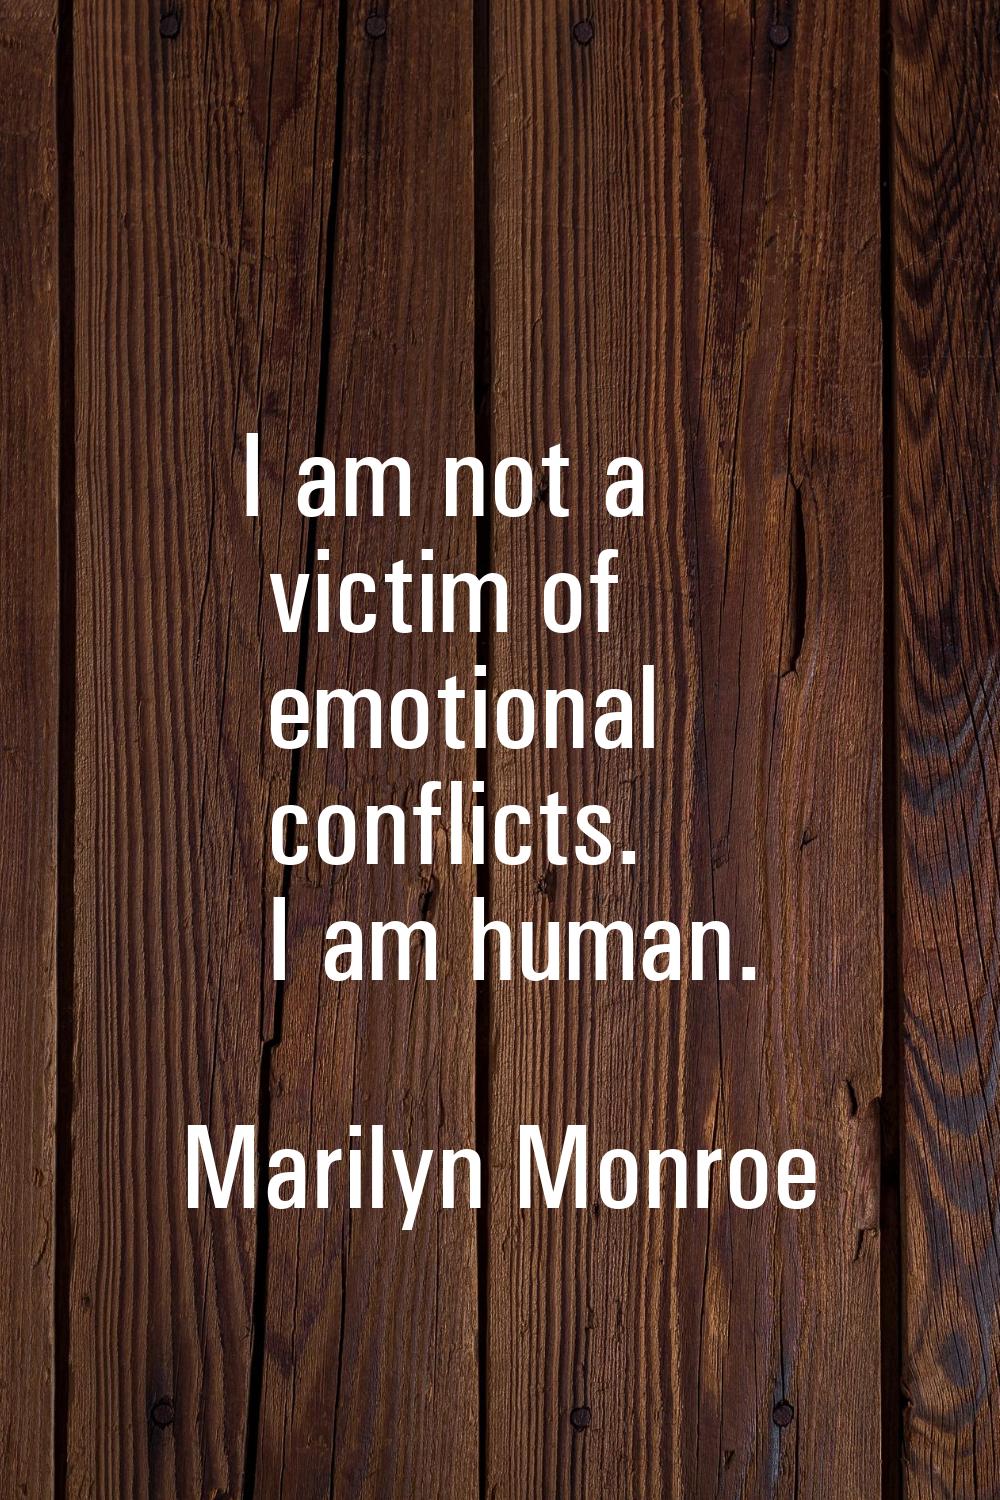 I am not a victim of emotional conflicts. I am human.